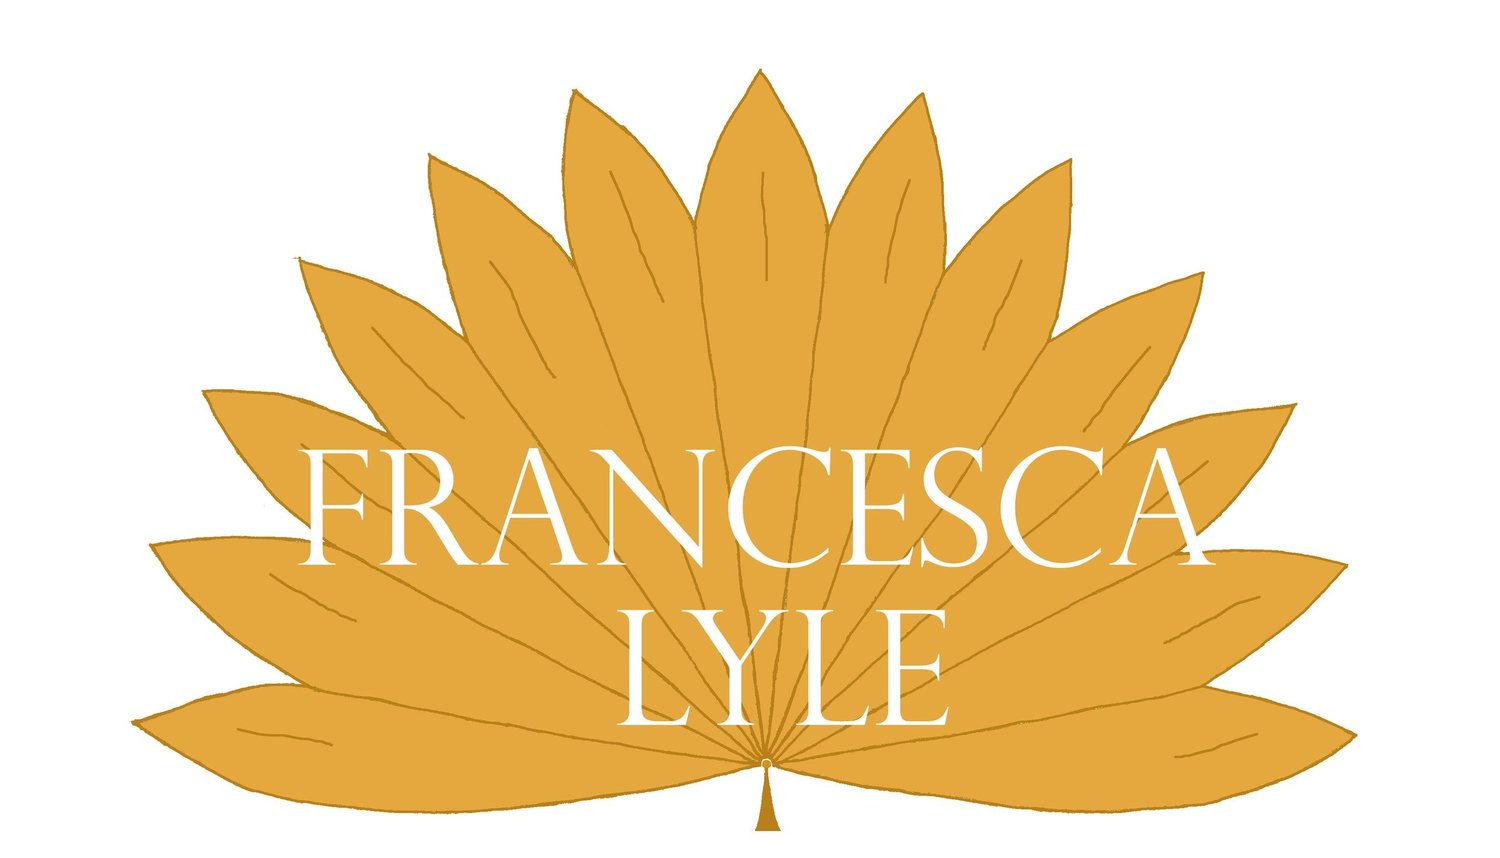 Francesca Lyle